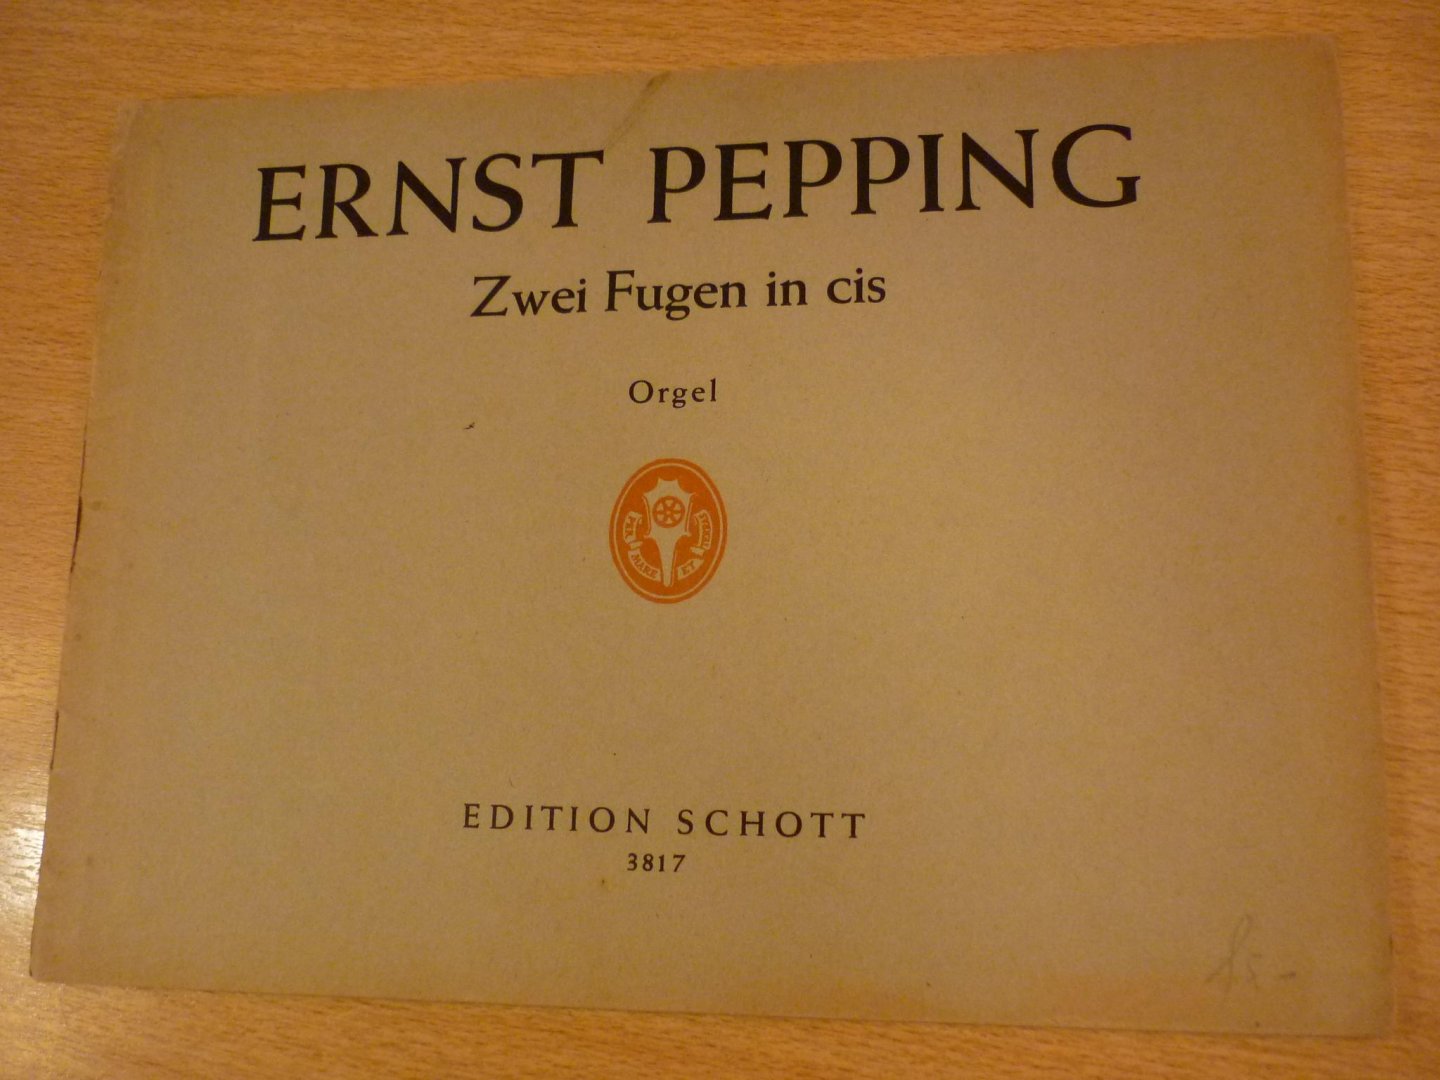 Pepping; Ernst - Zwei Fugen in cis - voor orgel